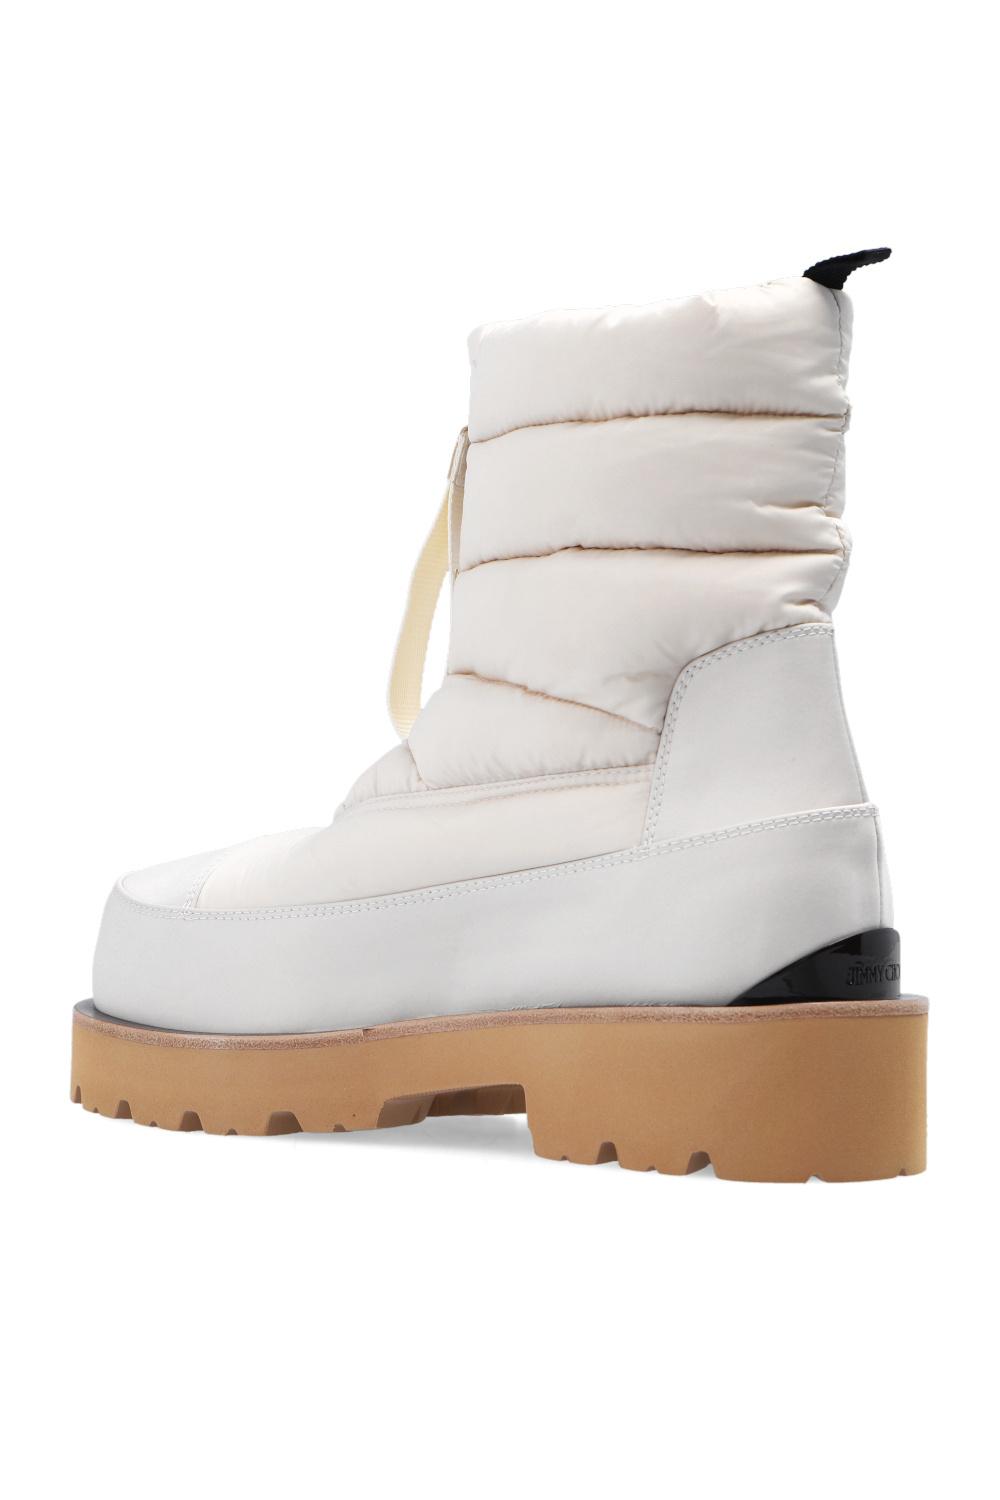 Jimmy Choo winter boots